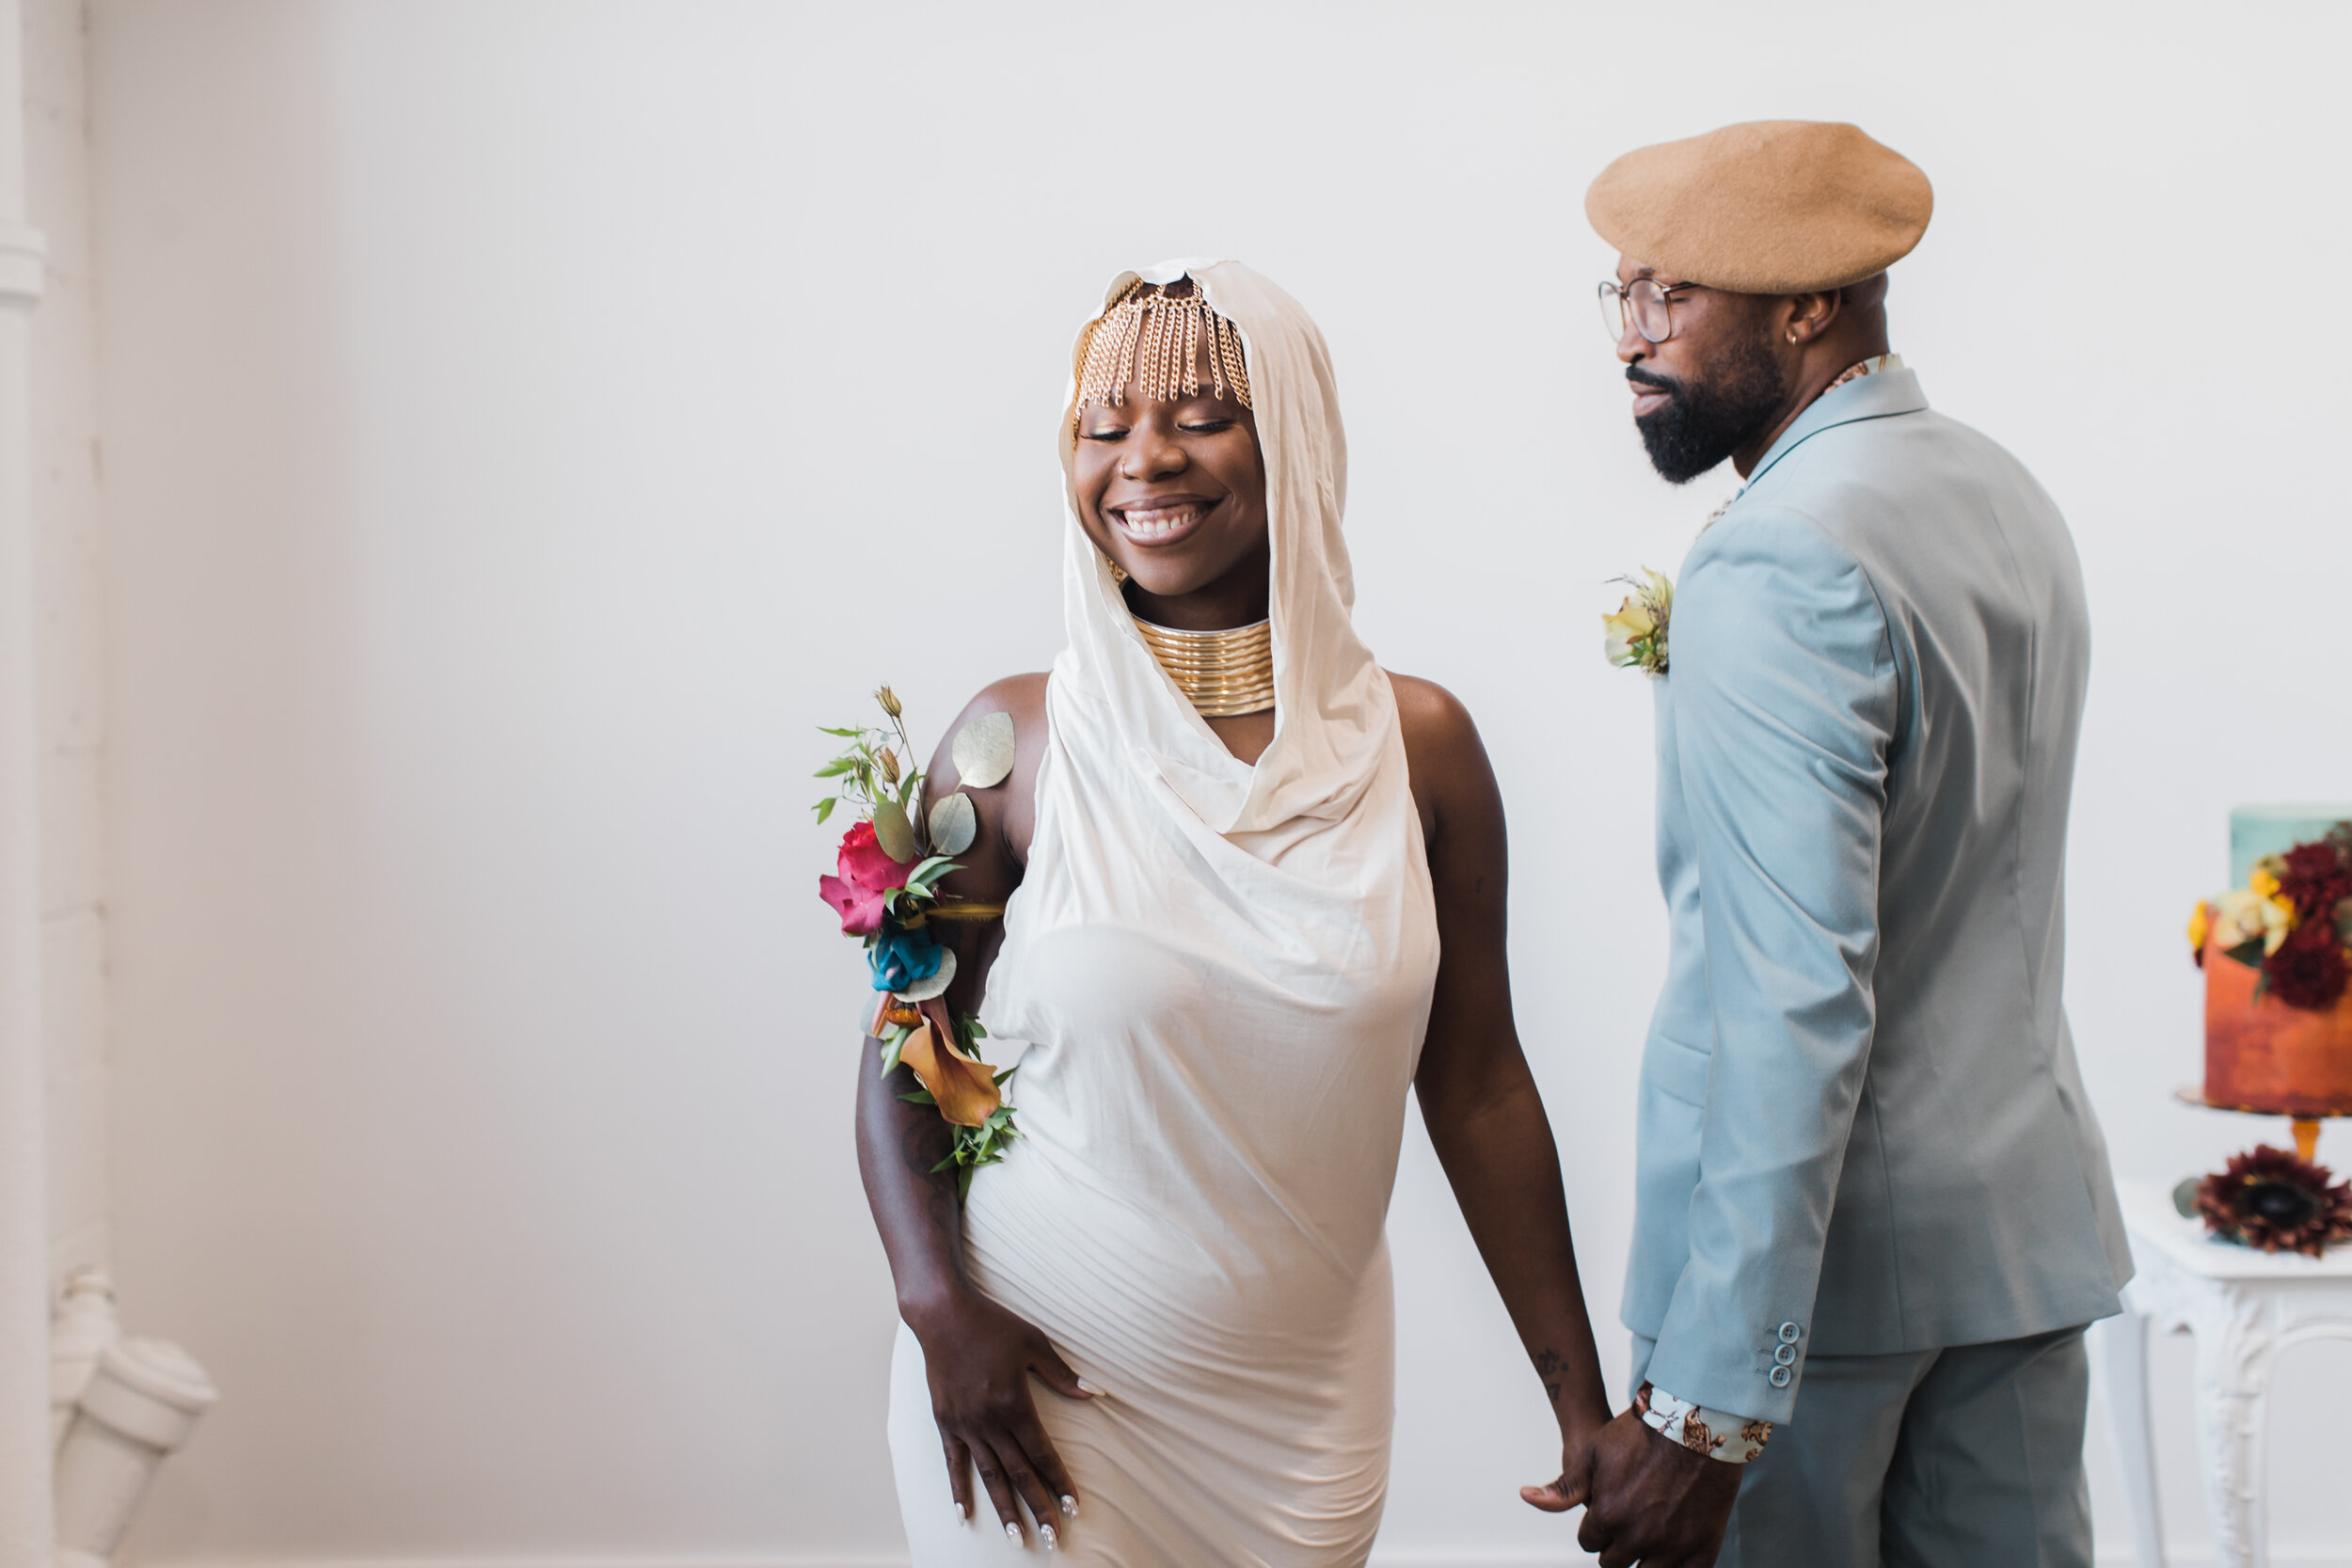 Black Love Matters Wedding Styled Shoot Baltimore Maryland Black Wedding Photographers Megapixels Media Photography at Haven Street Ballroom African Bride and Groom Wedding Details (46 of 120).jpg